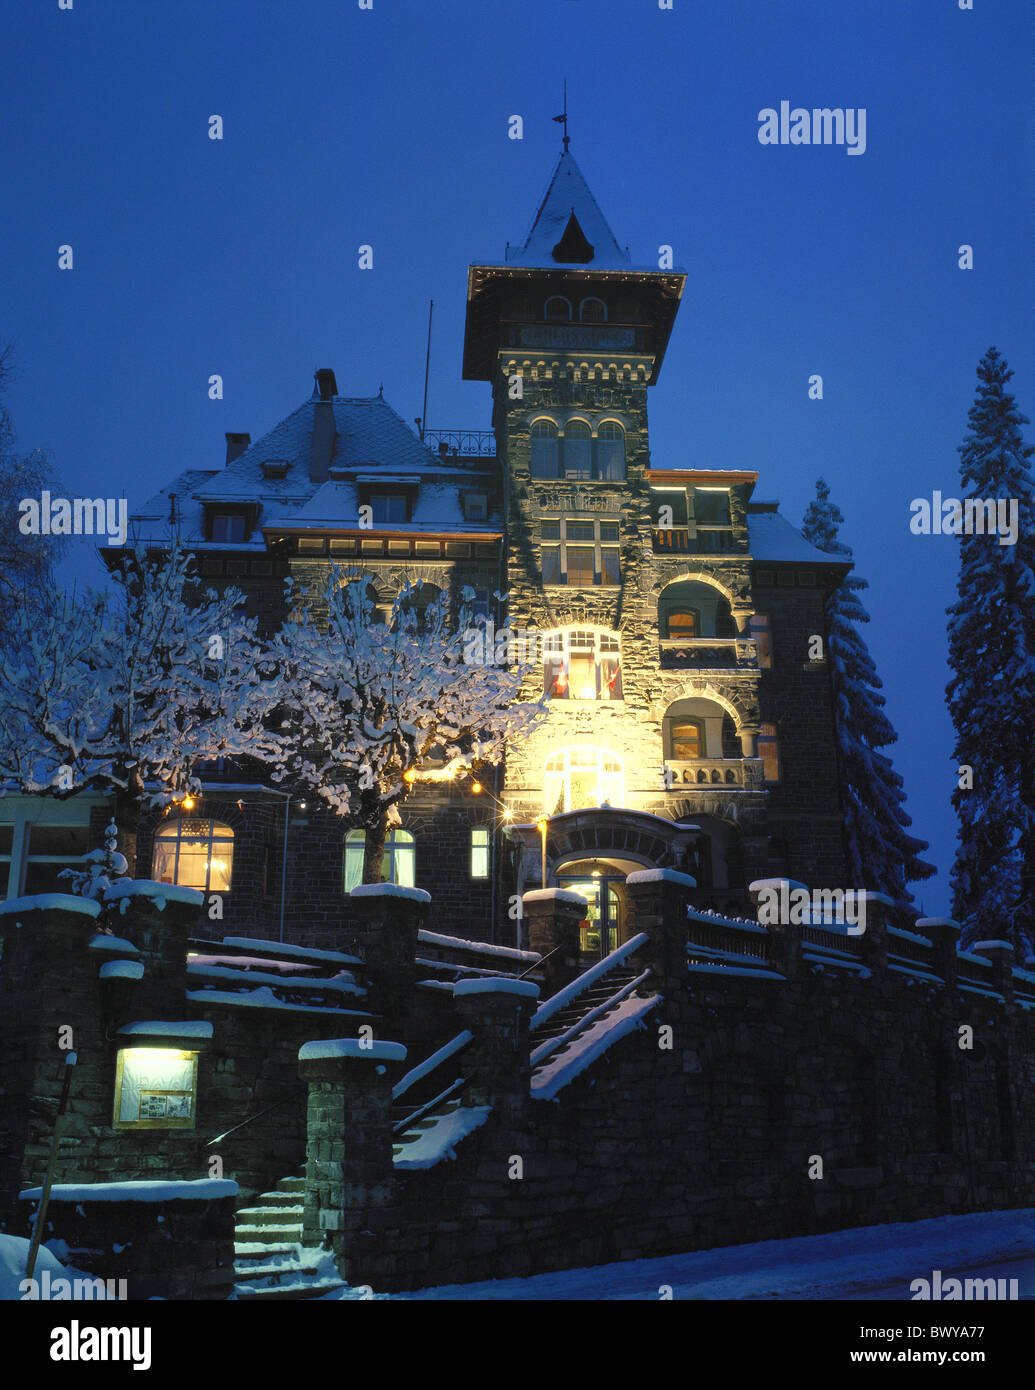 Flims Graubünden Graubünden Hotel bei Nacht Schloss Hotel Schweiz Europa Winter Beleuchtung Stockfoto